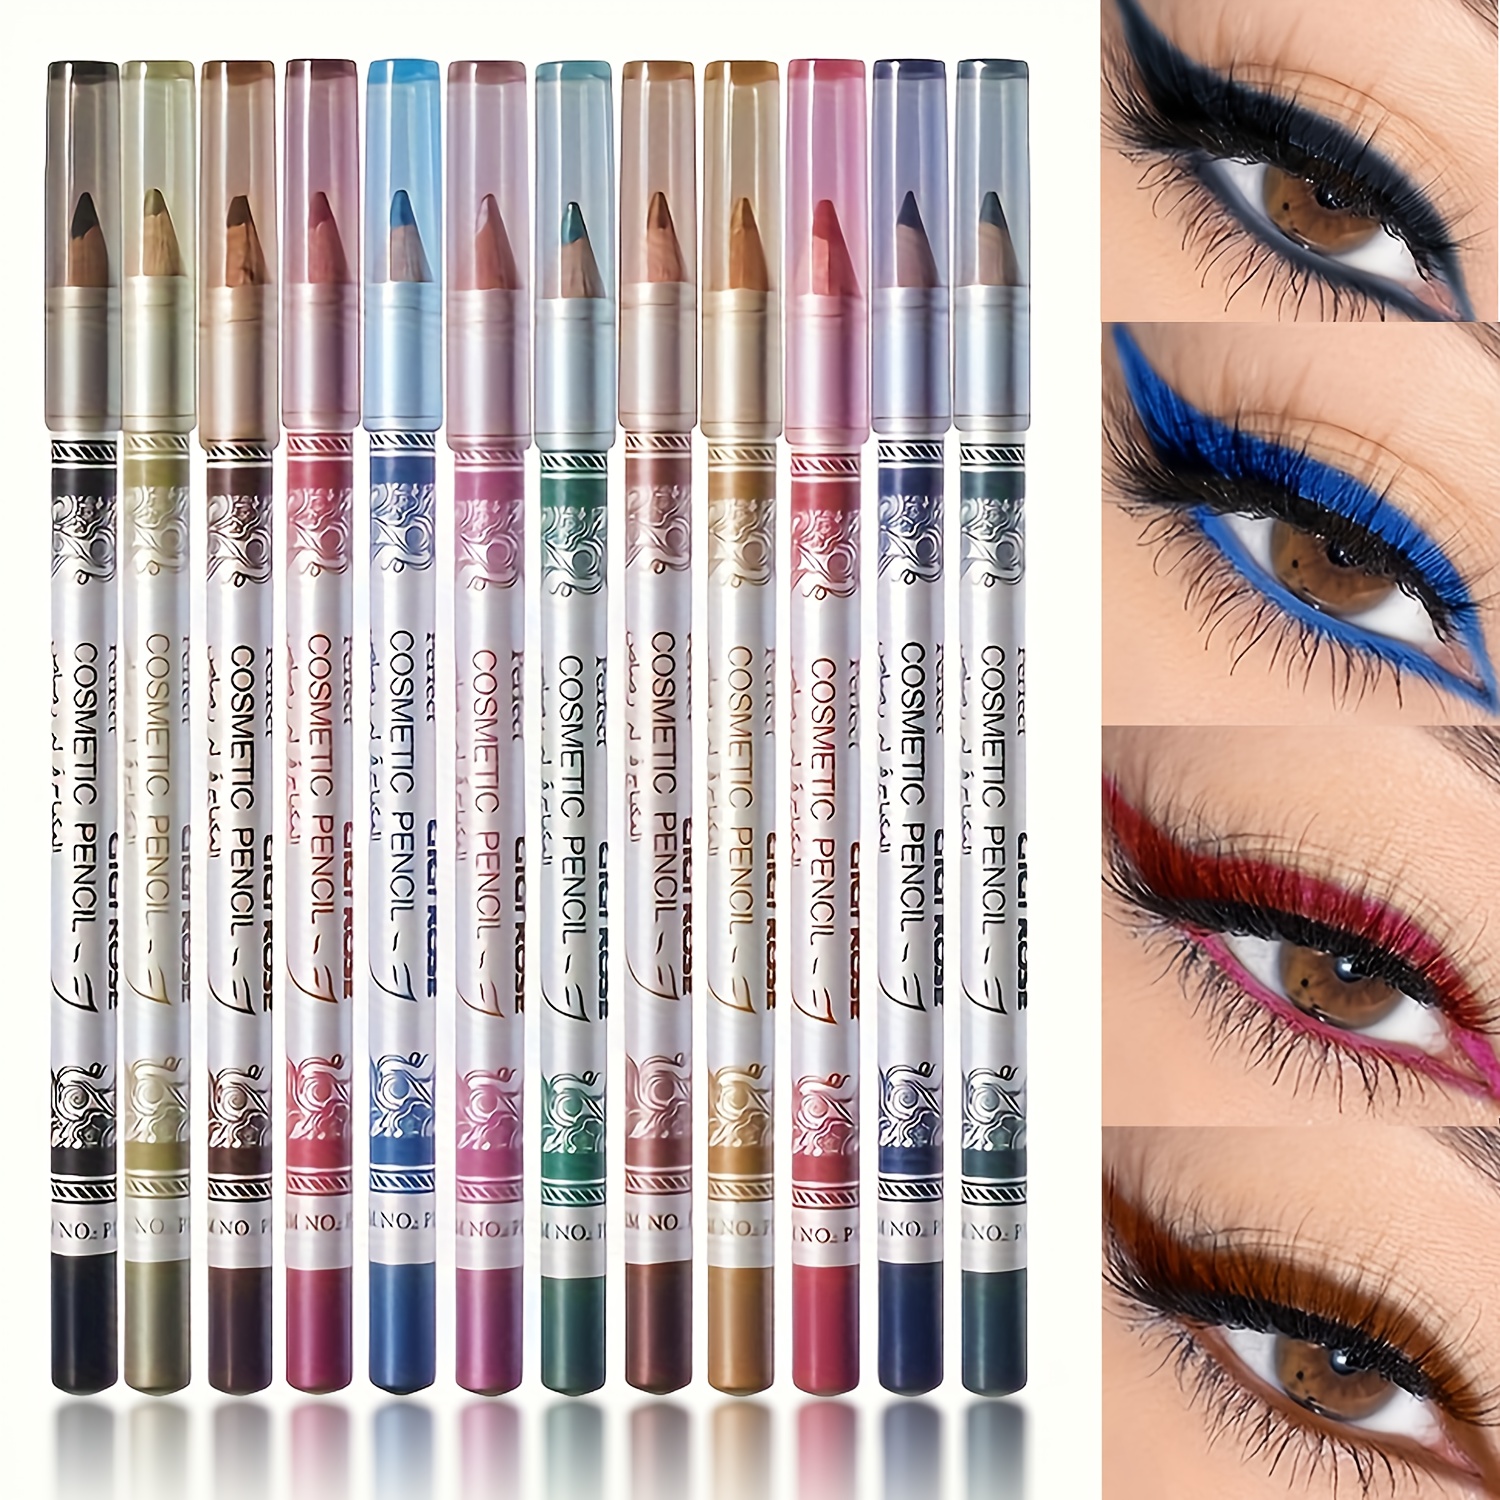 

12pcs Matte Colorful Eyeliner Pencil Set, Long-lasting Waterproof Cosmetic Eye Makeup, Smudge-proof Beauty Essentials